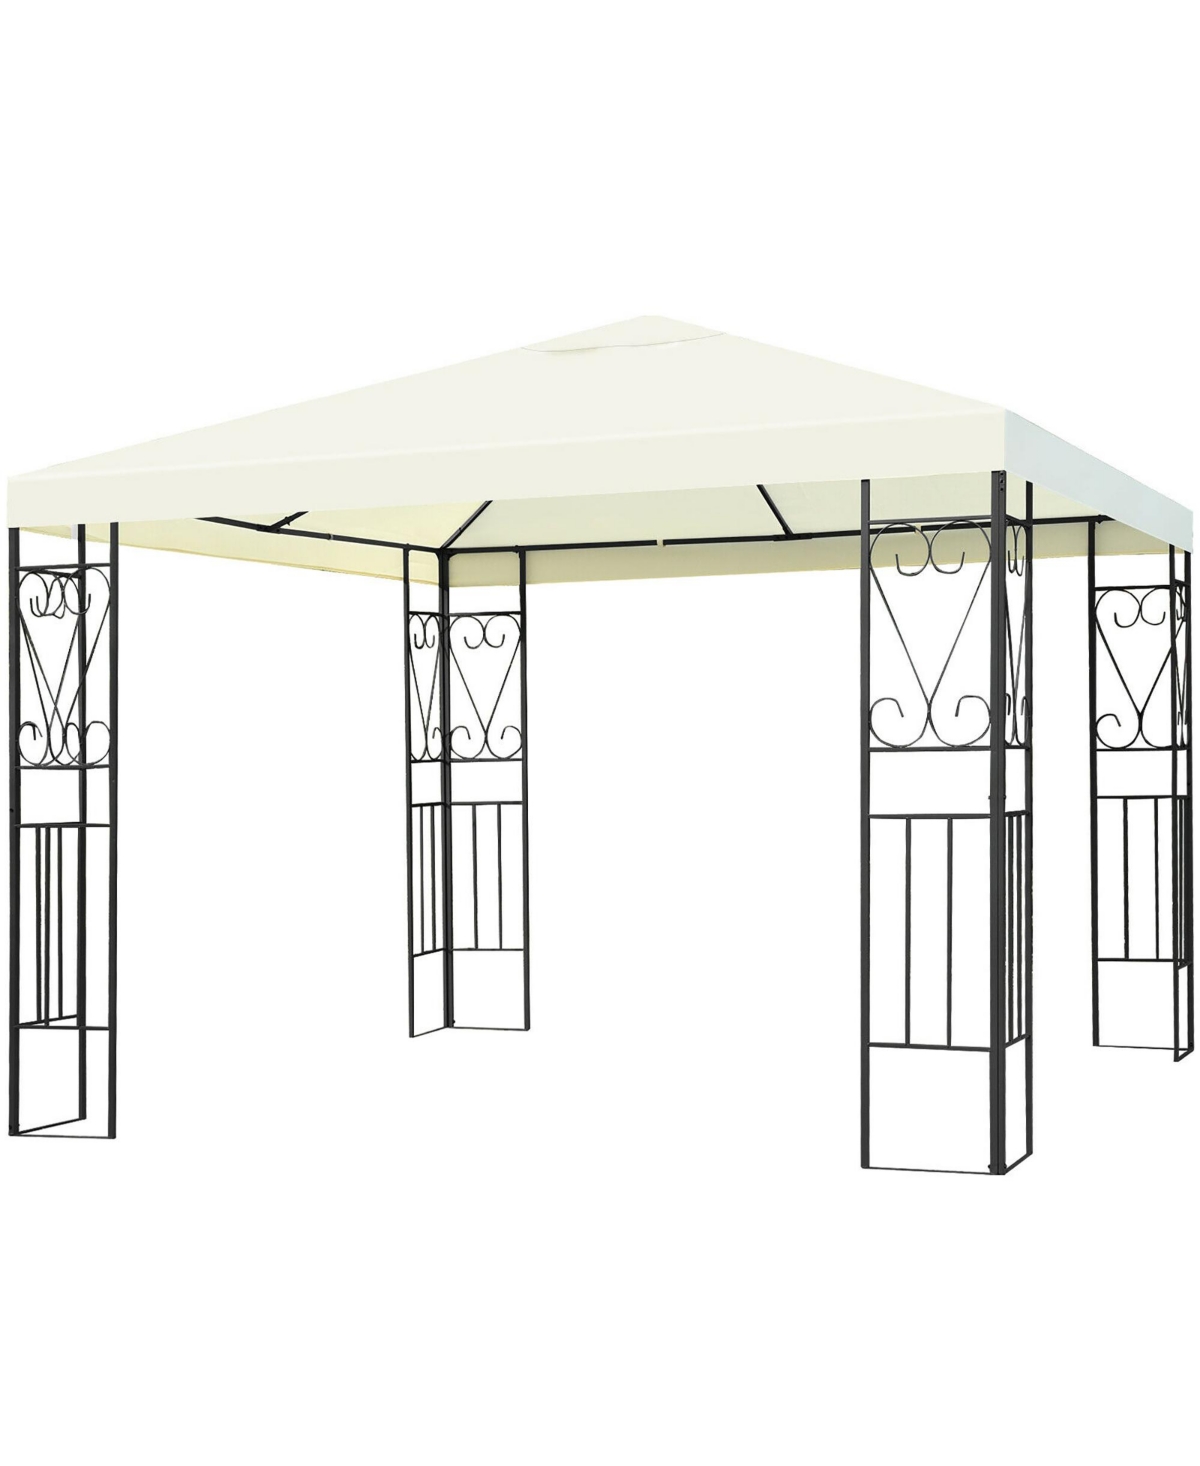 10'x10' Patio Gazebo Canopy Tent Steel Frame Shelter Patio Party Awning - Beige/khaki